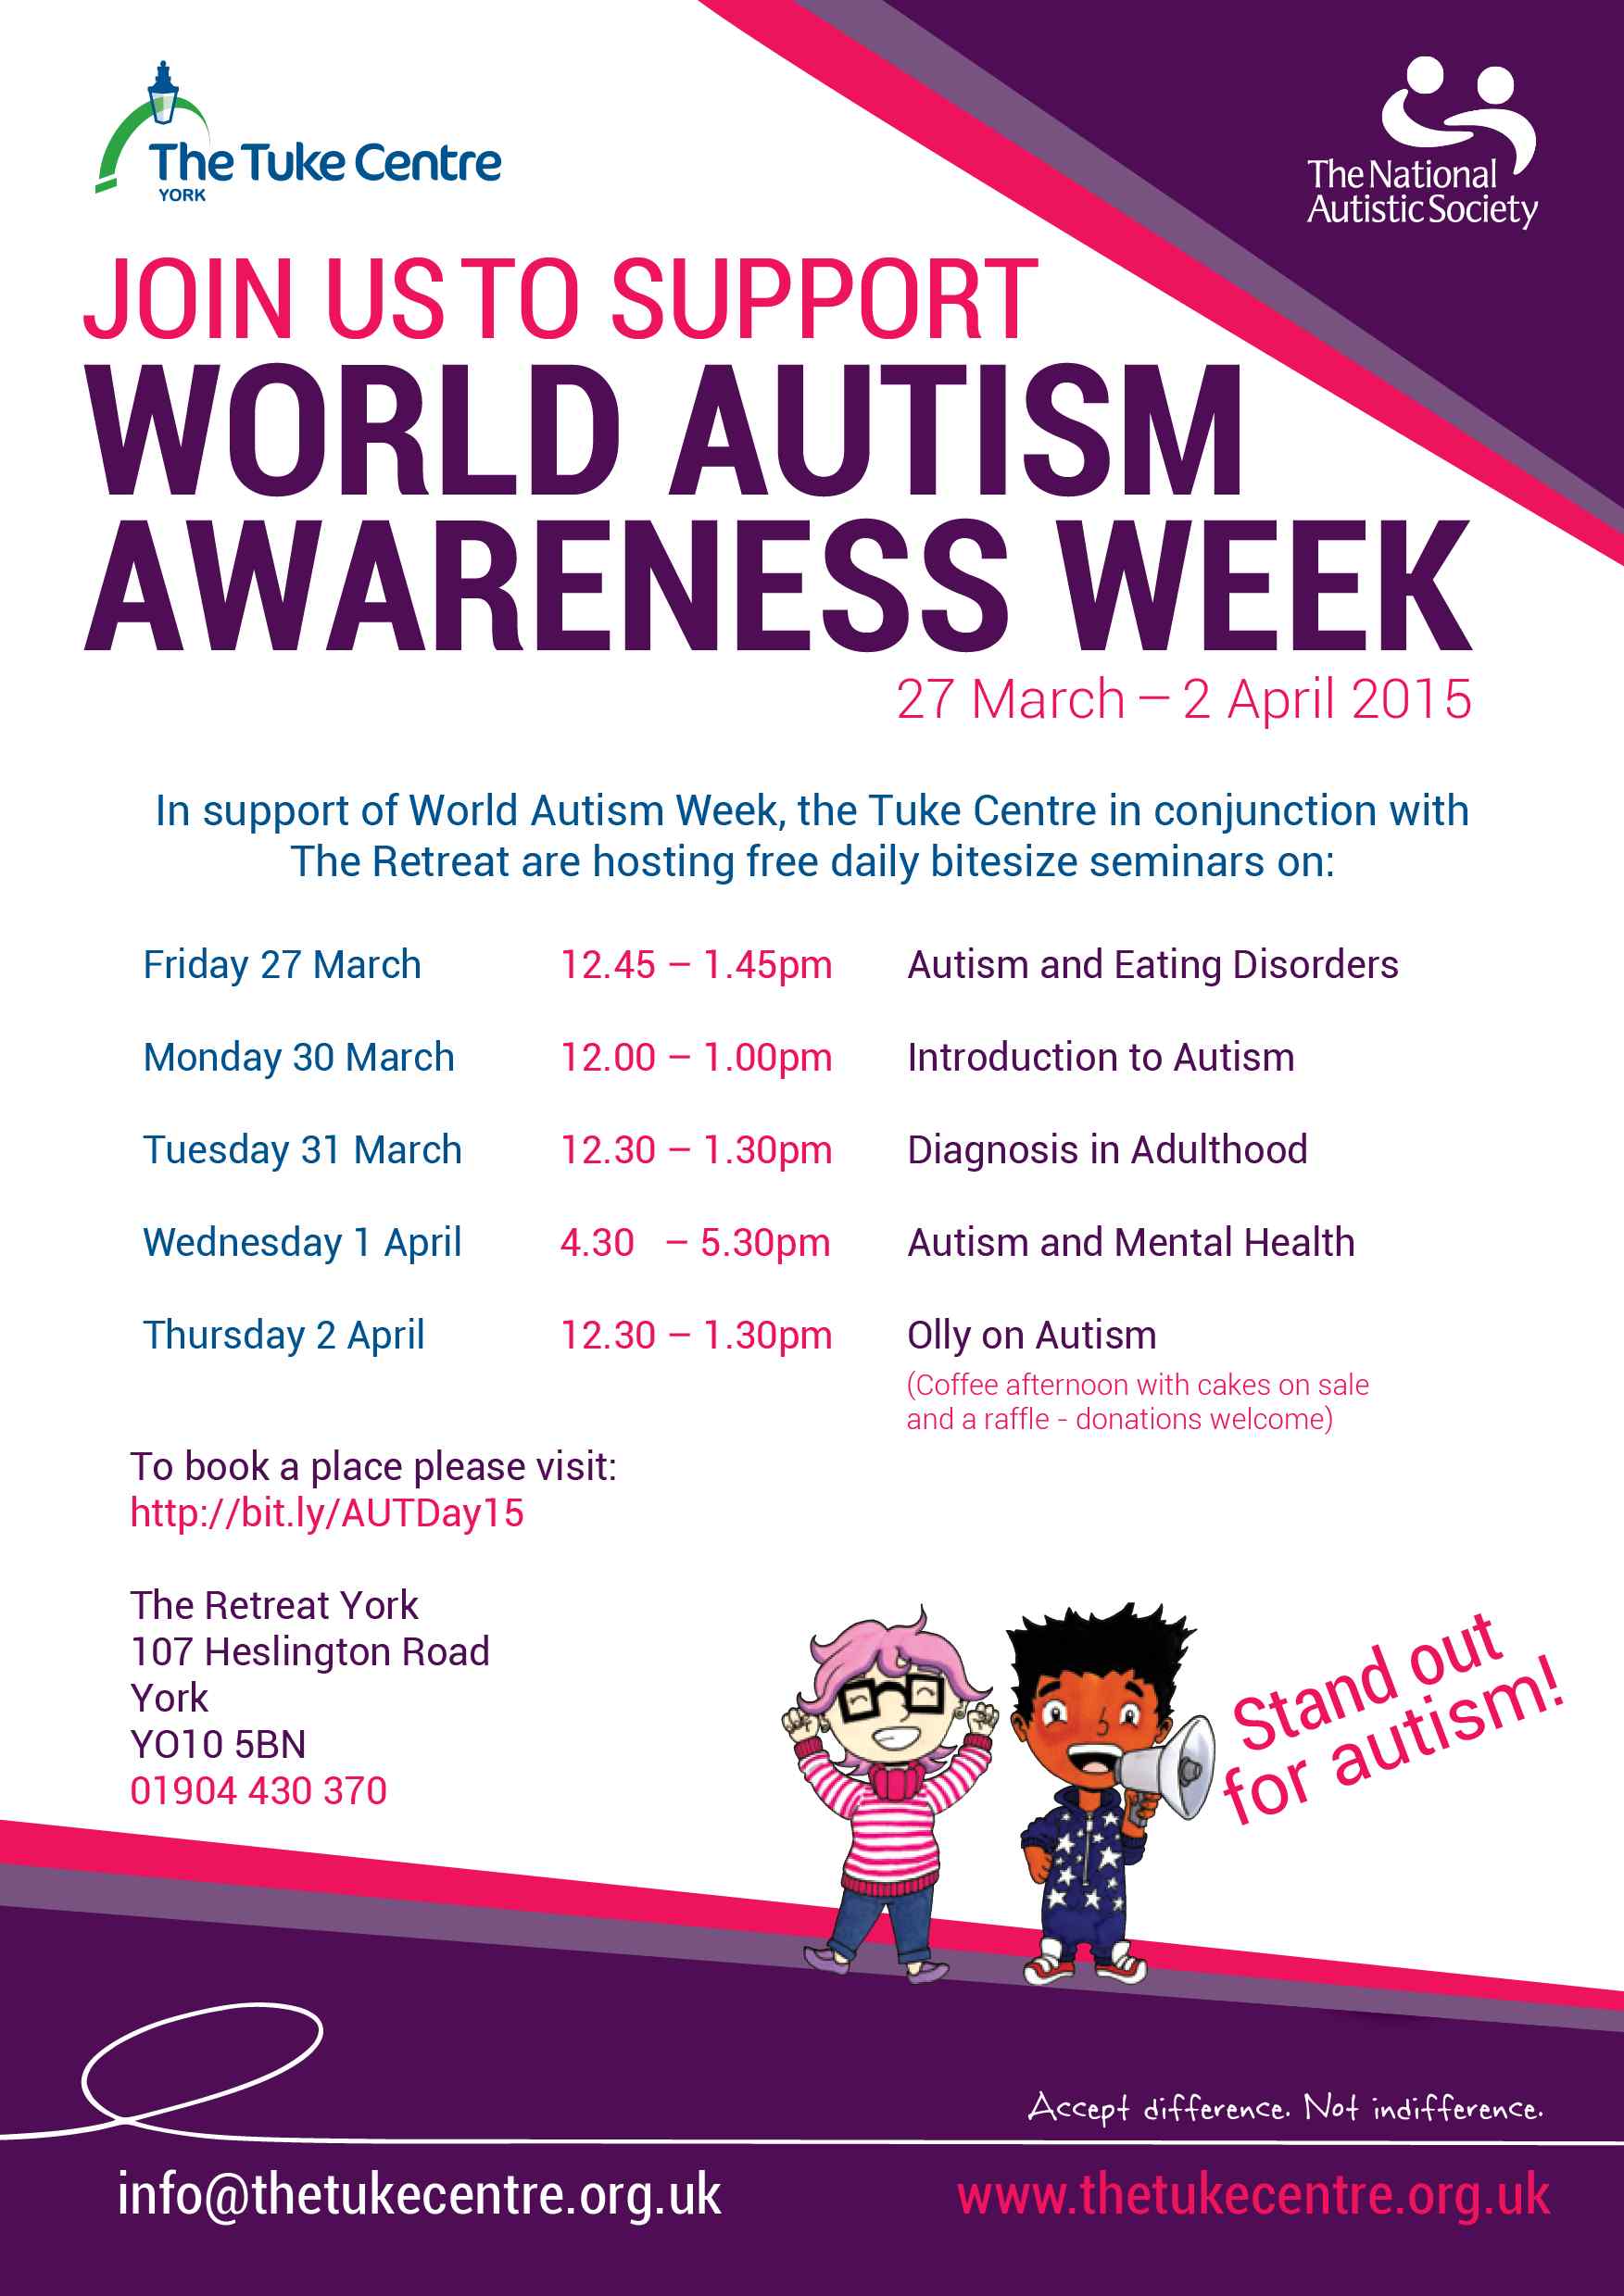 Autism Awareness Week event announced Steve Galloway